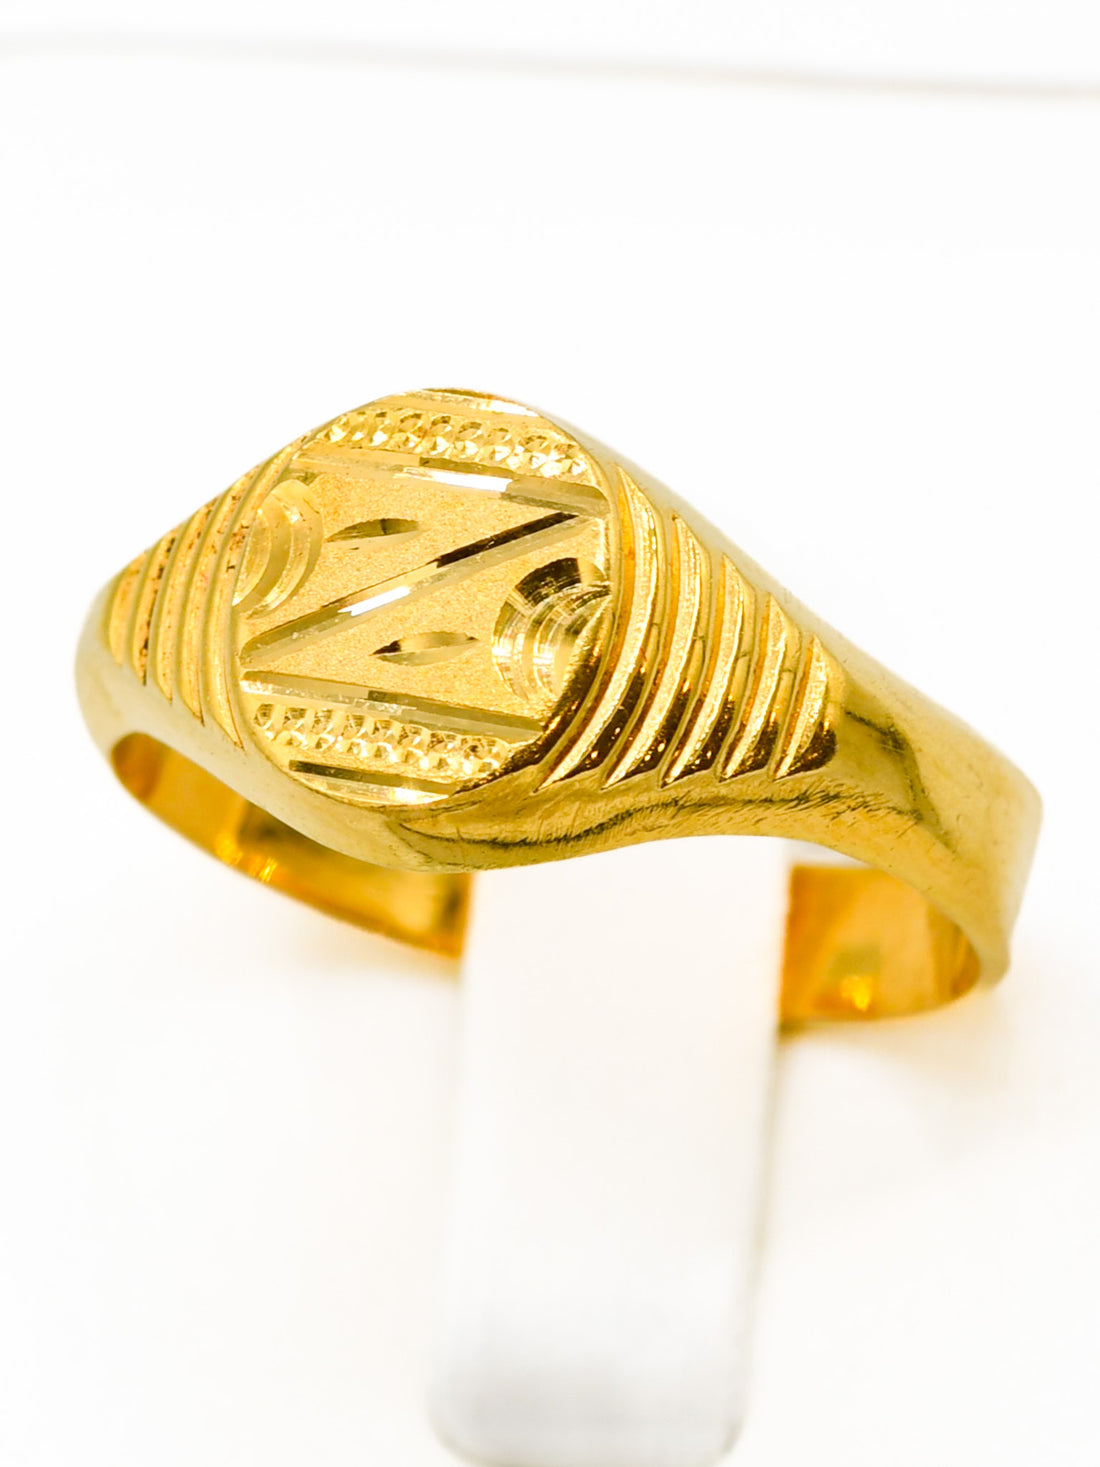 22ct Gold Mens Ring